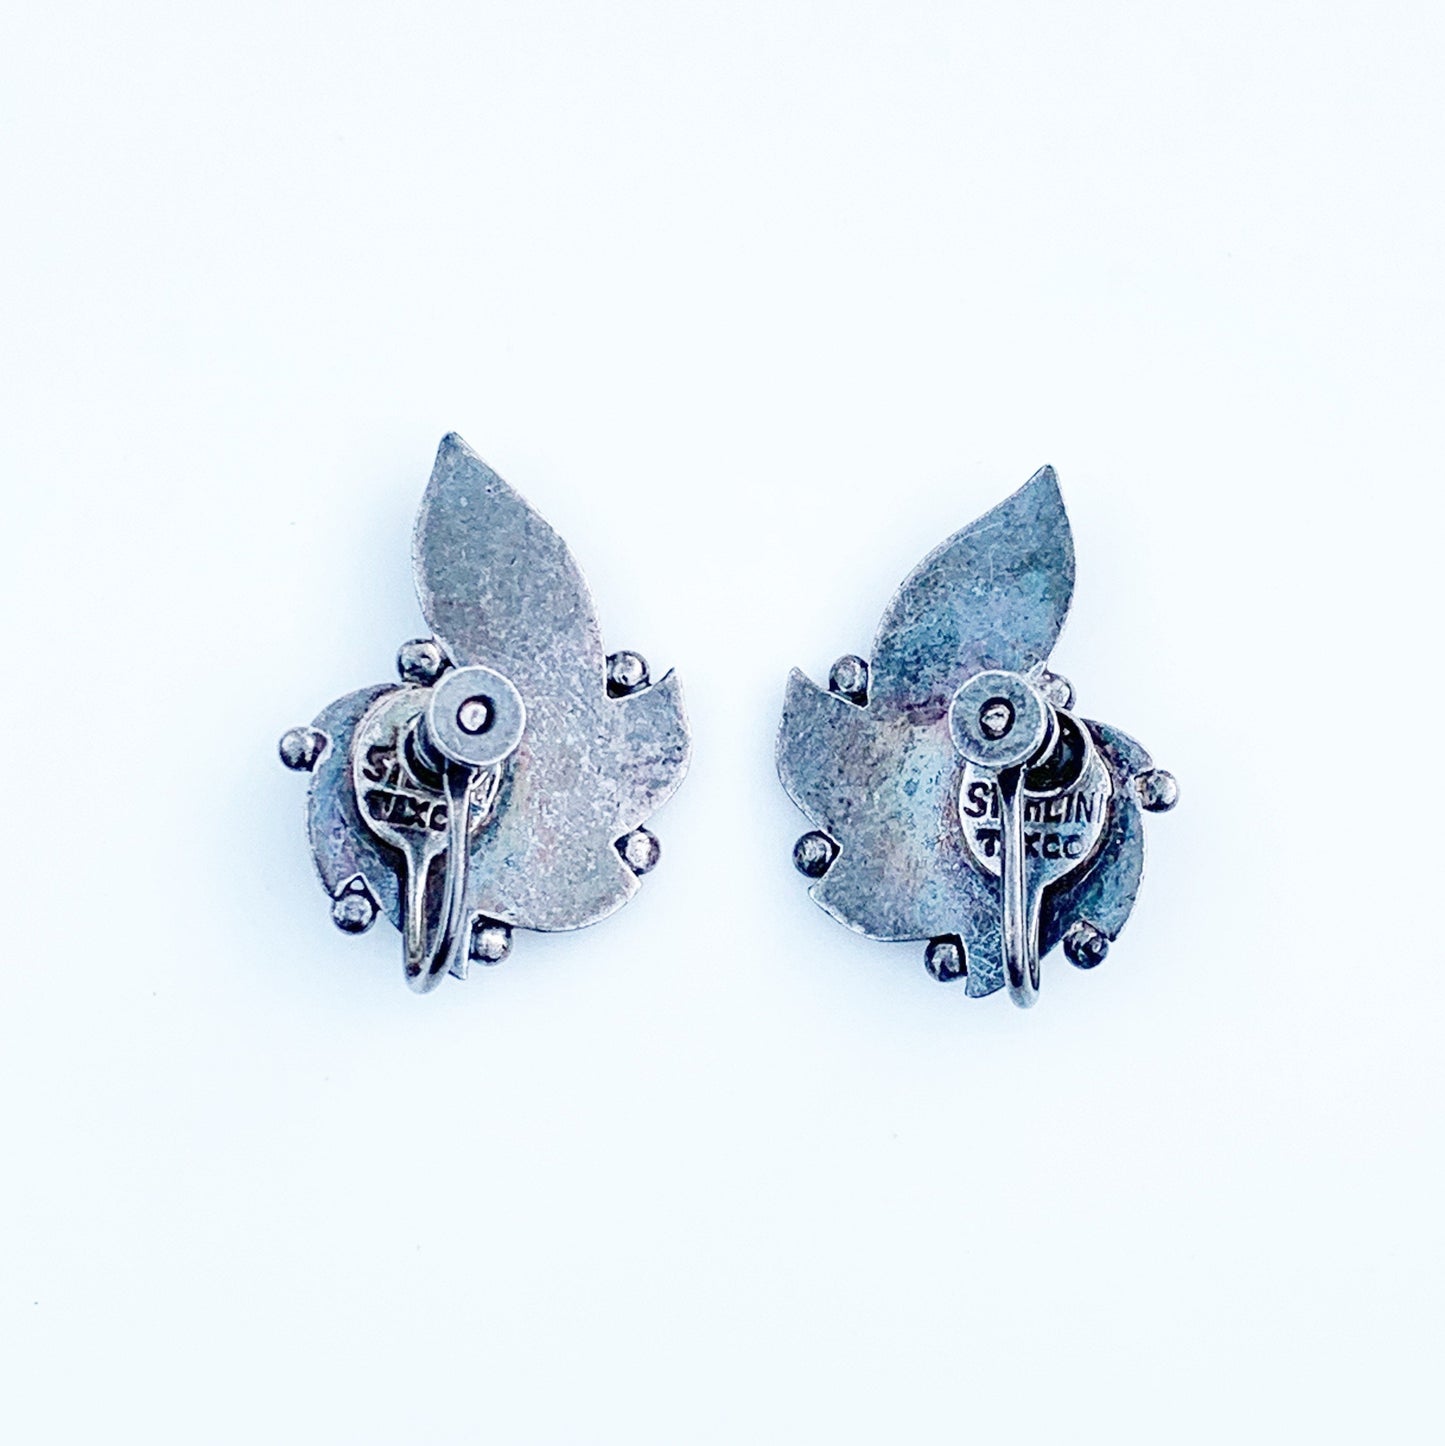 Vintage Silver Turquoise Screw Back Earrings | Mexican Silver | TAXCO Screw Back Earrings